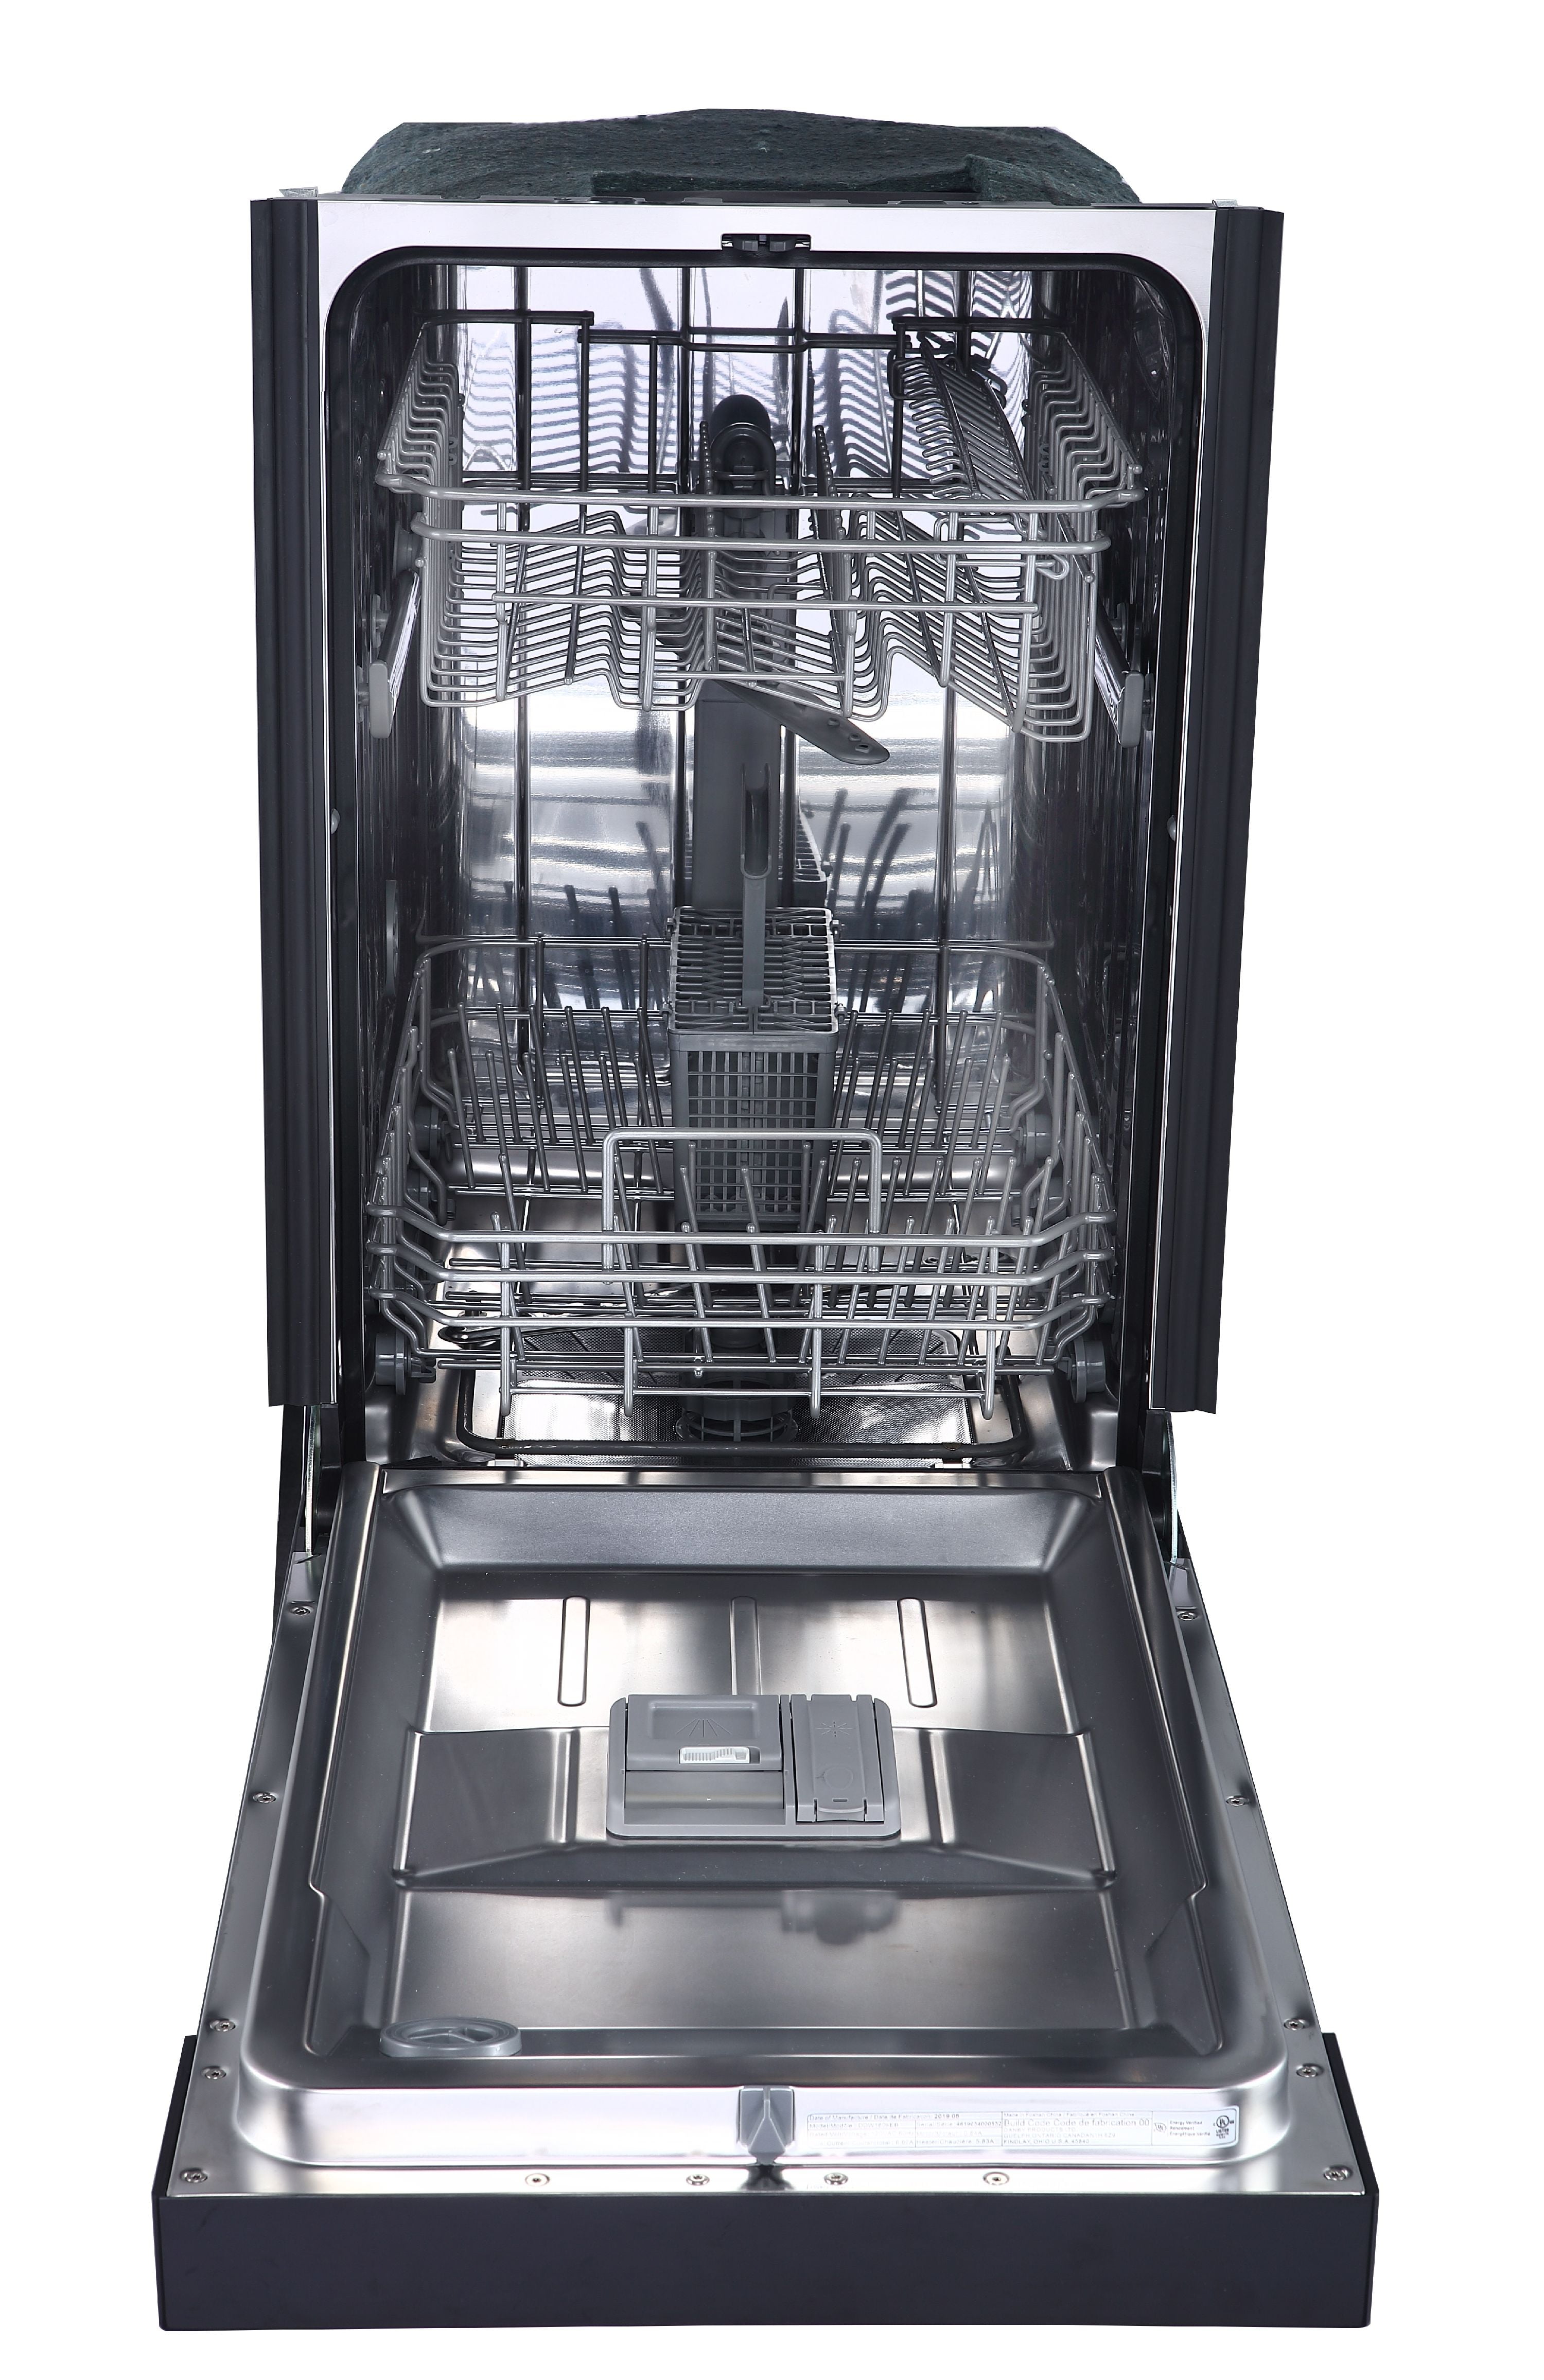 18 danby dishwasher